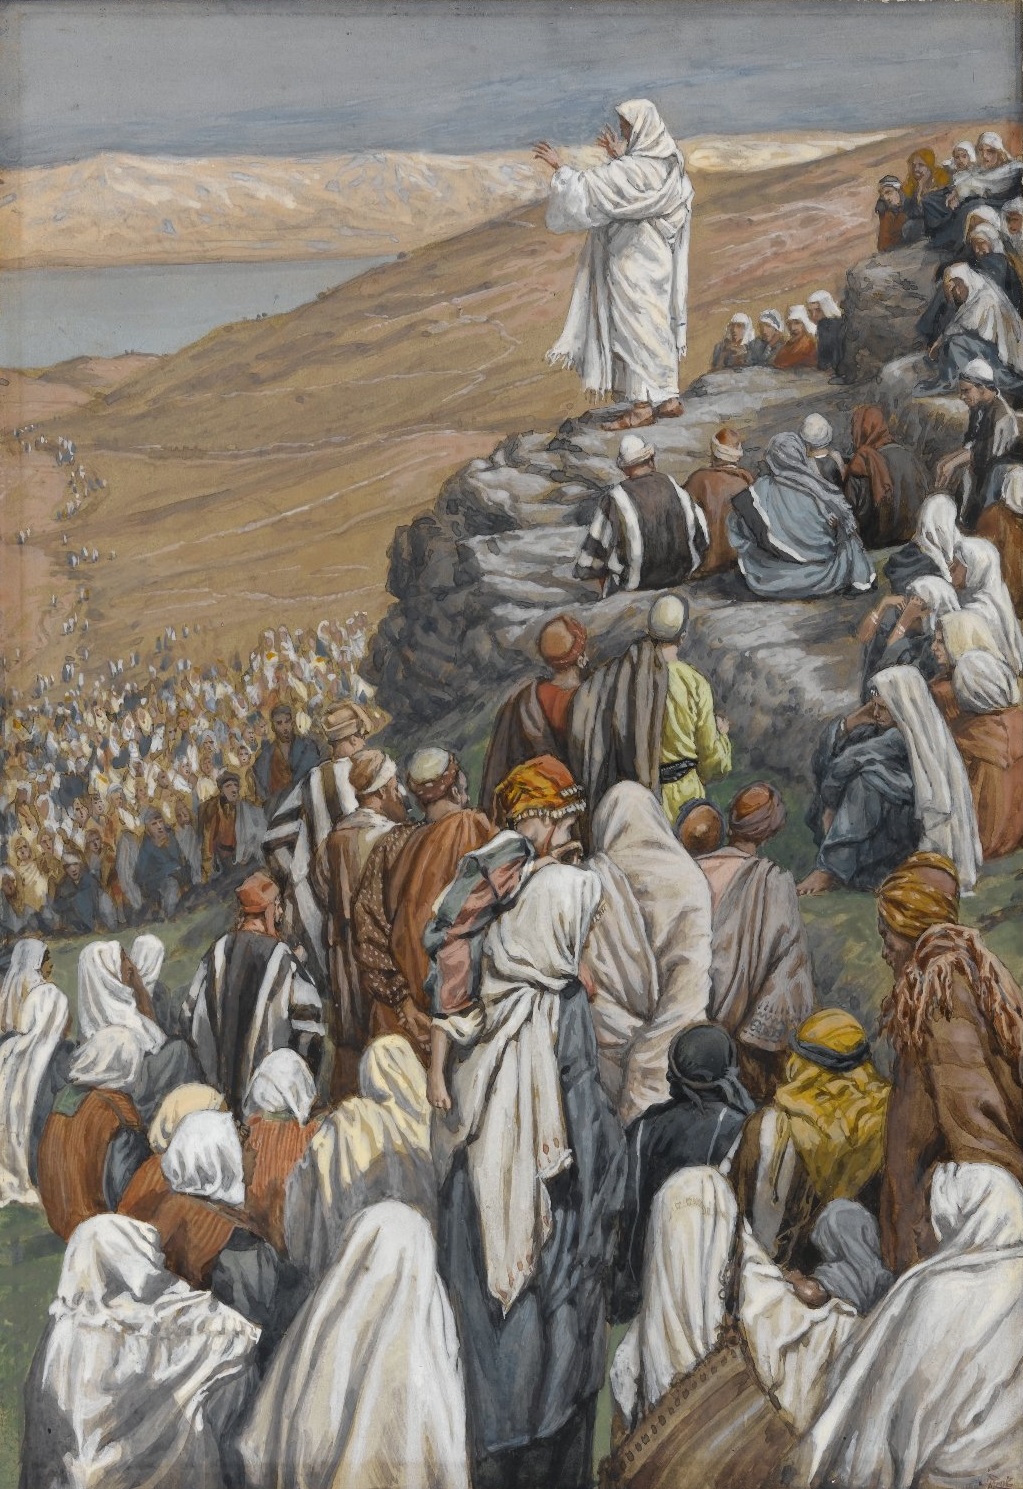 Christ teaching the multitude